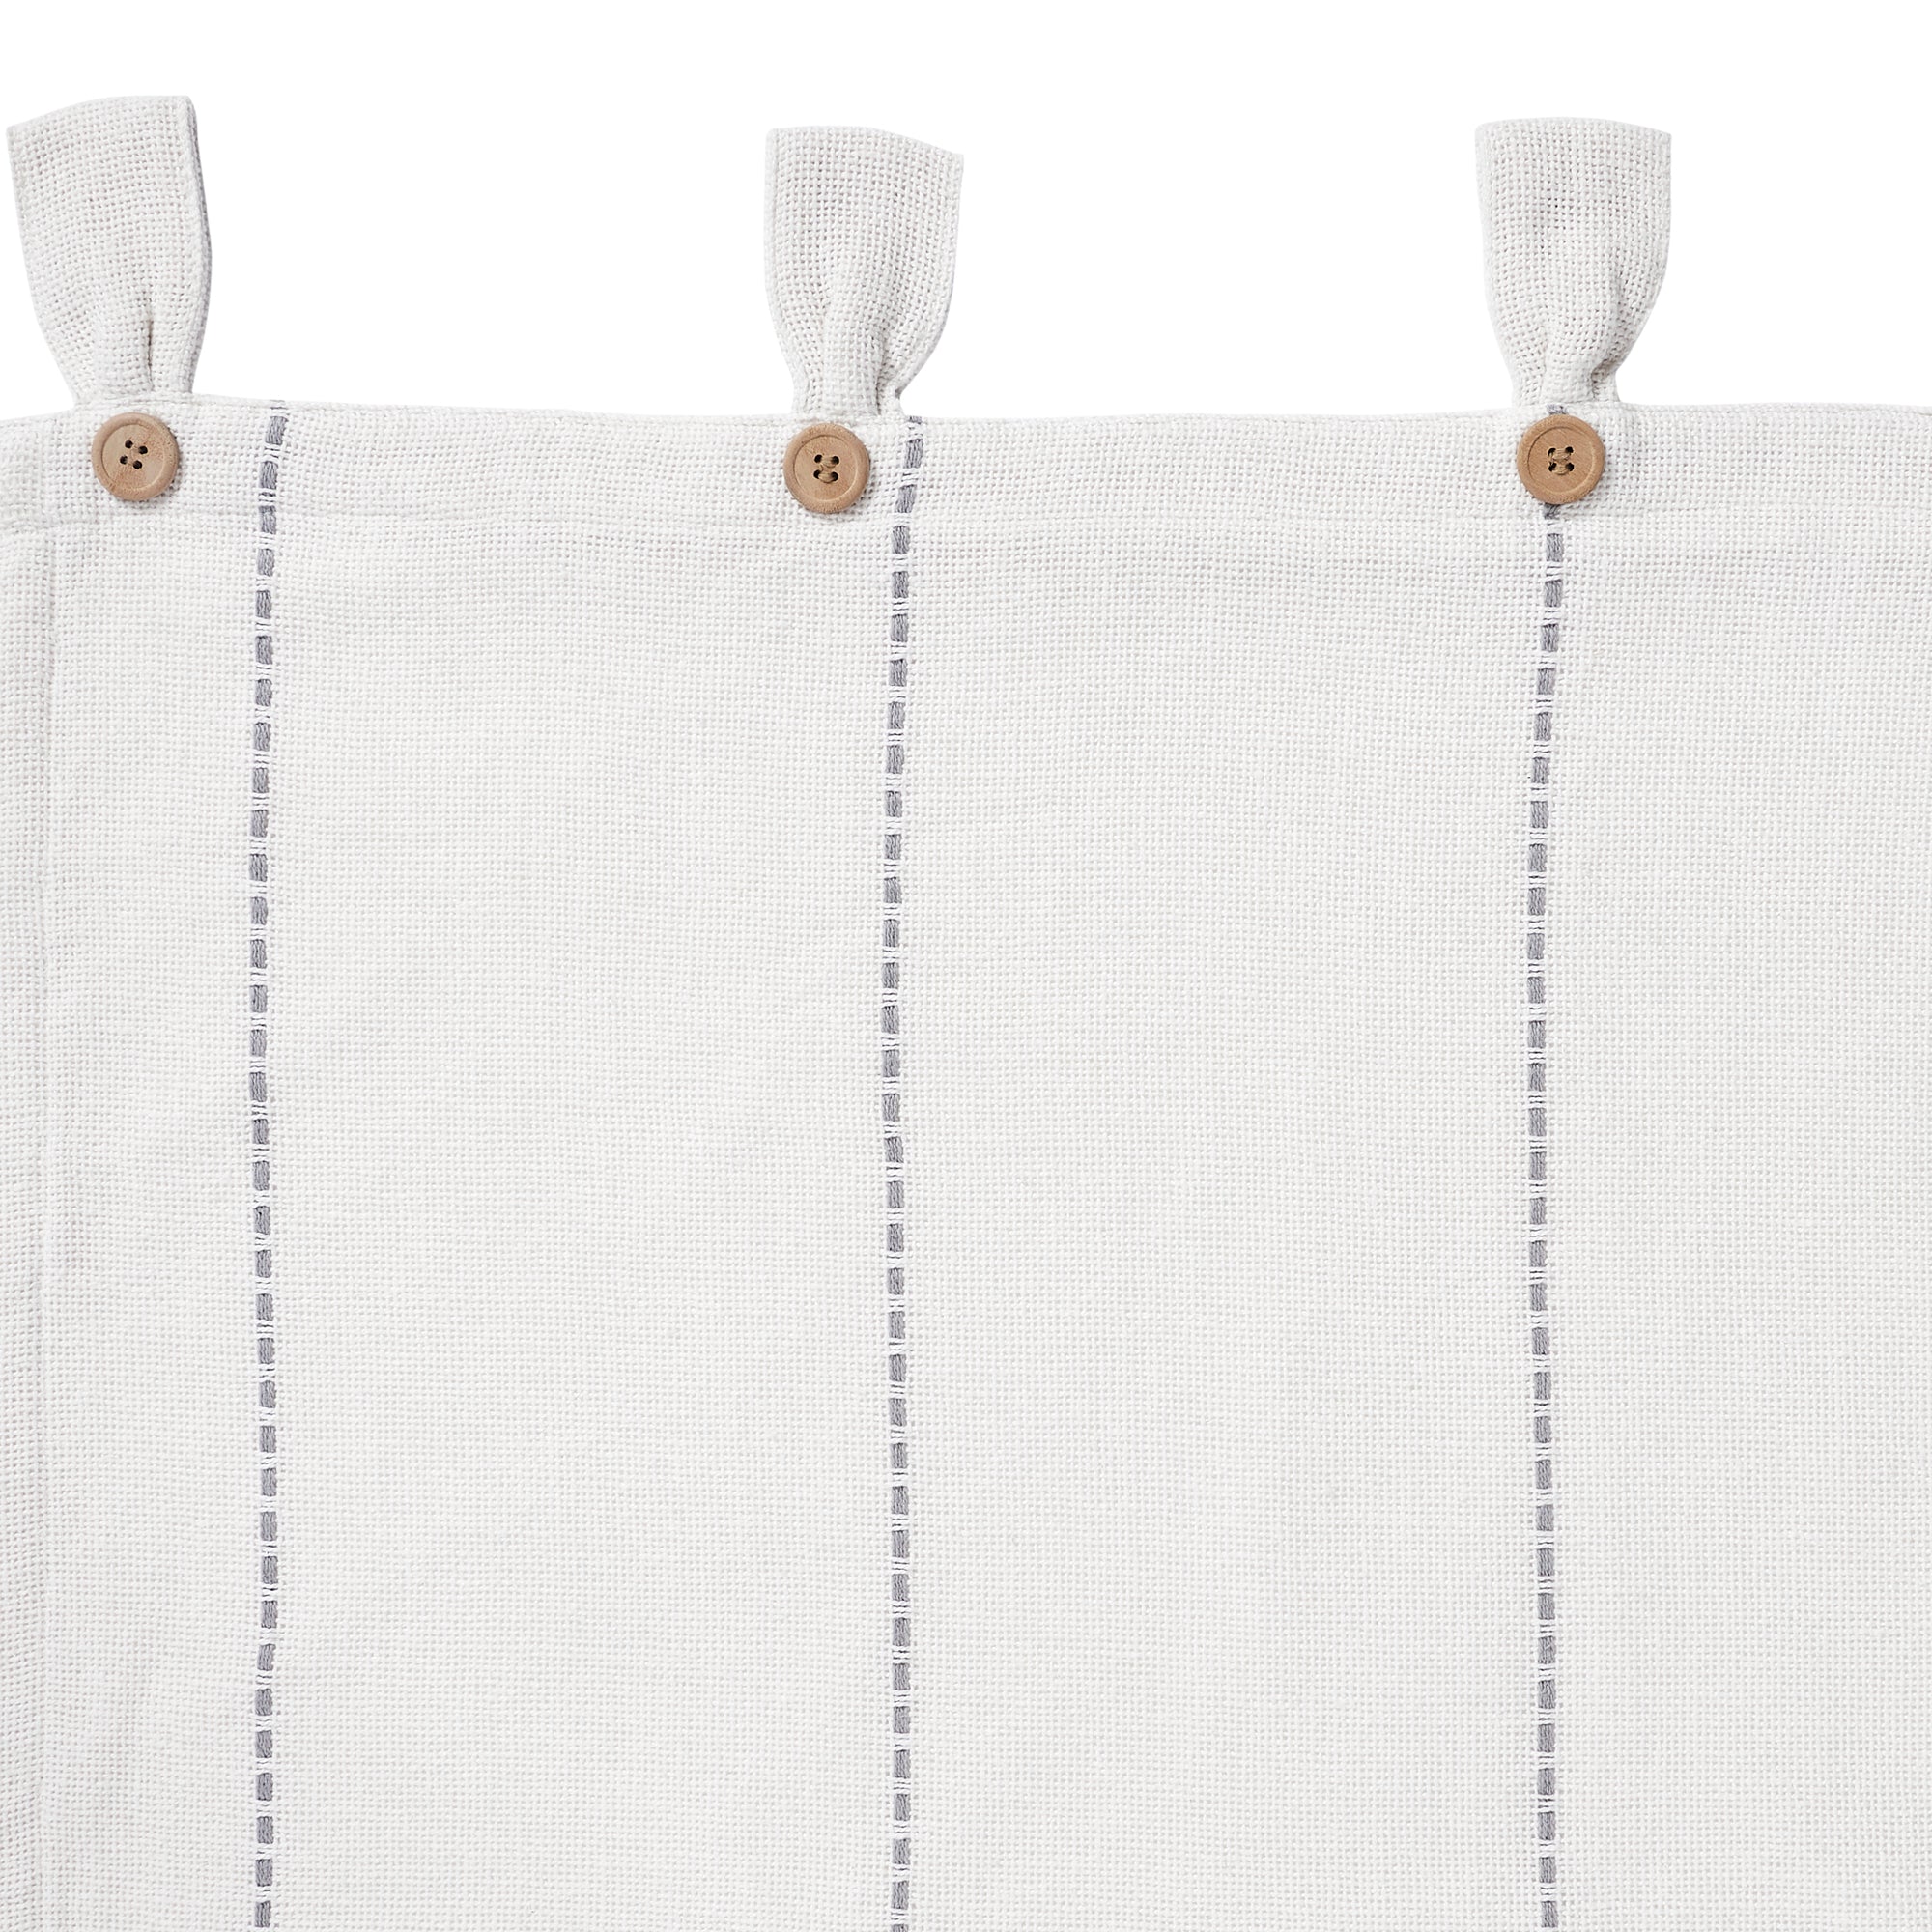 Stitched Burlap White Valance Curtain 16x72 VHC Brands